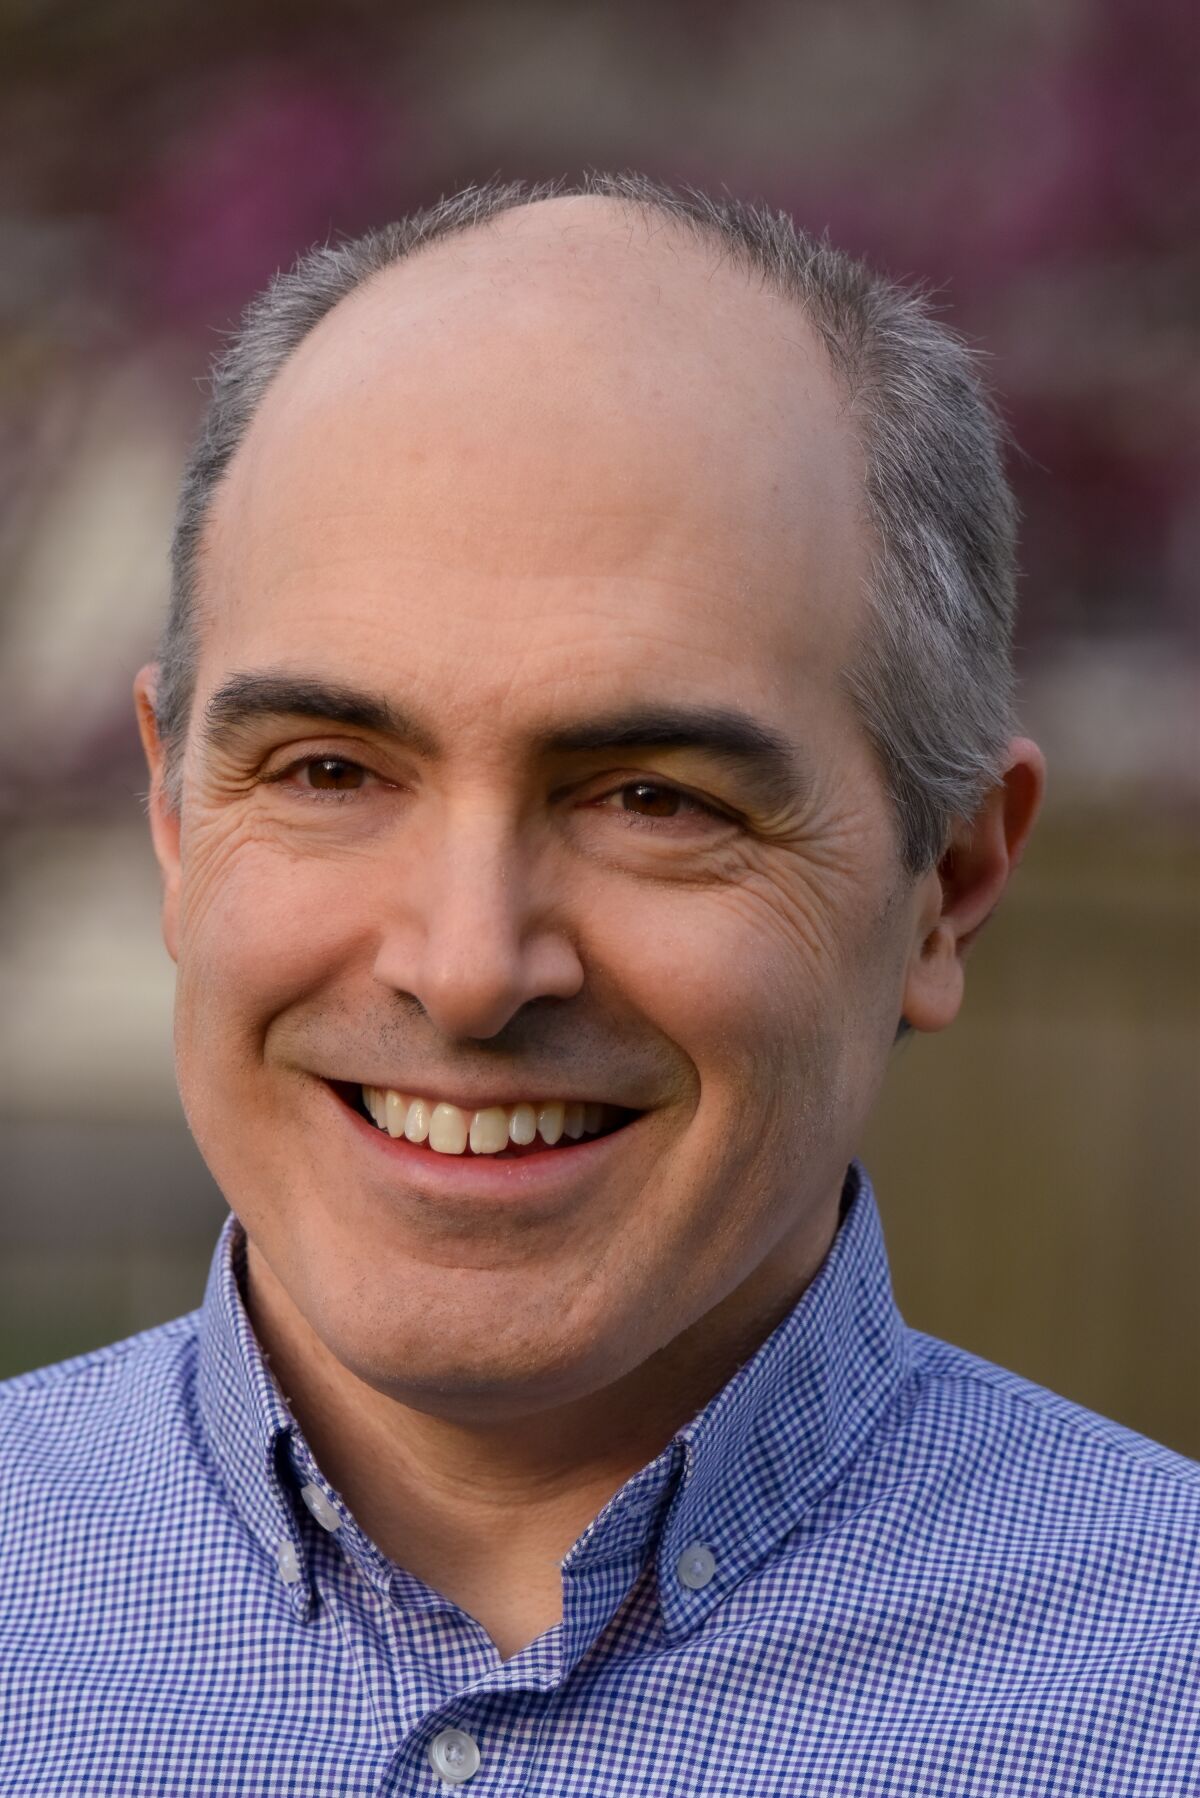 Psychology professor and author David DeSteno